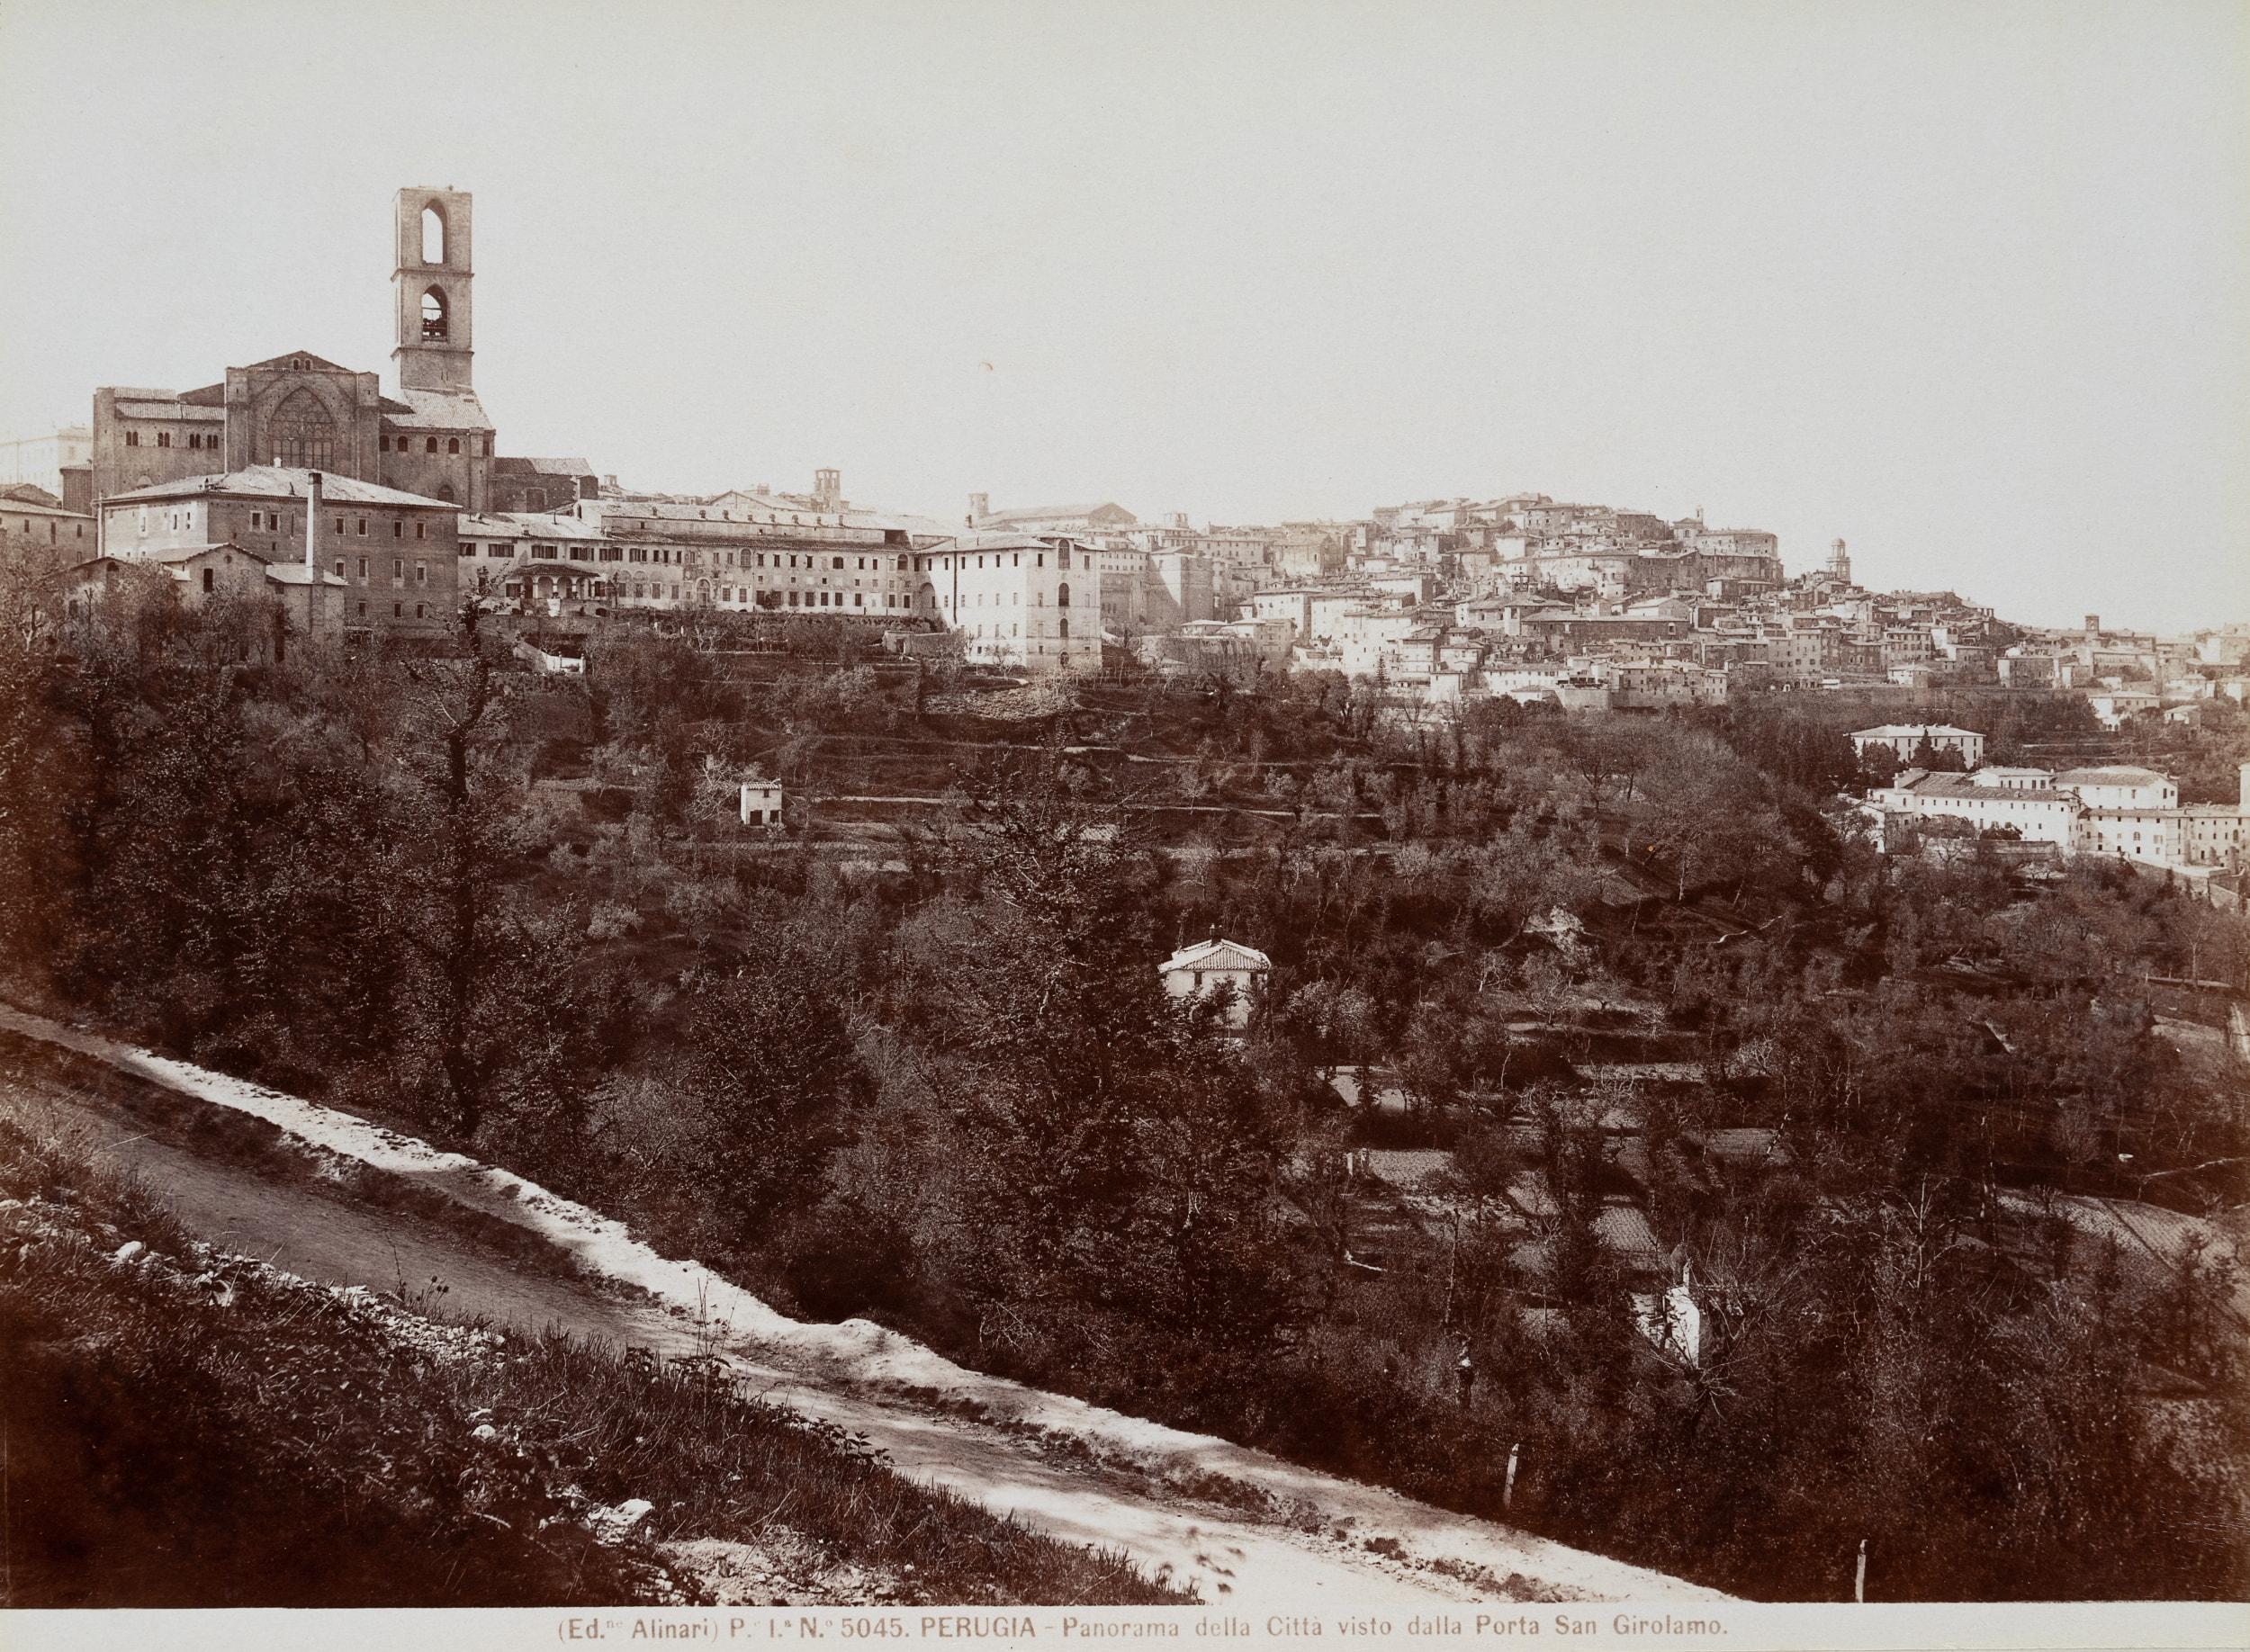 Fratelli Alinari Landscape Photograph - City panorama over Perugia